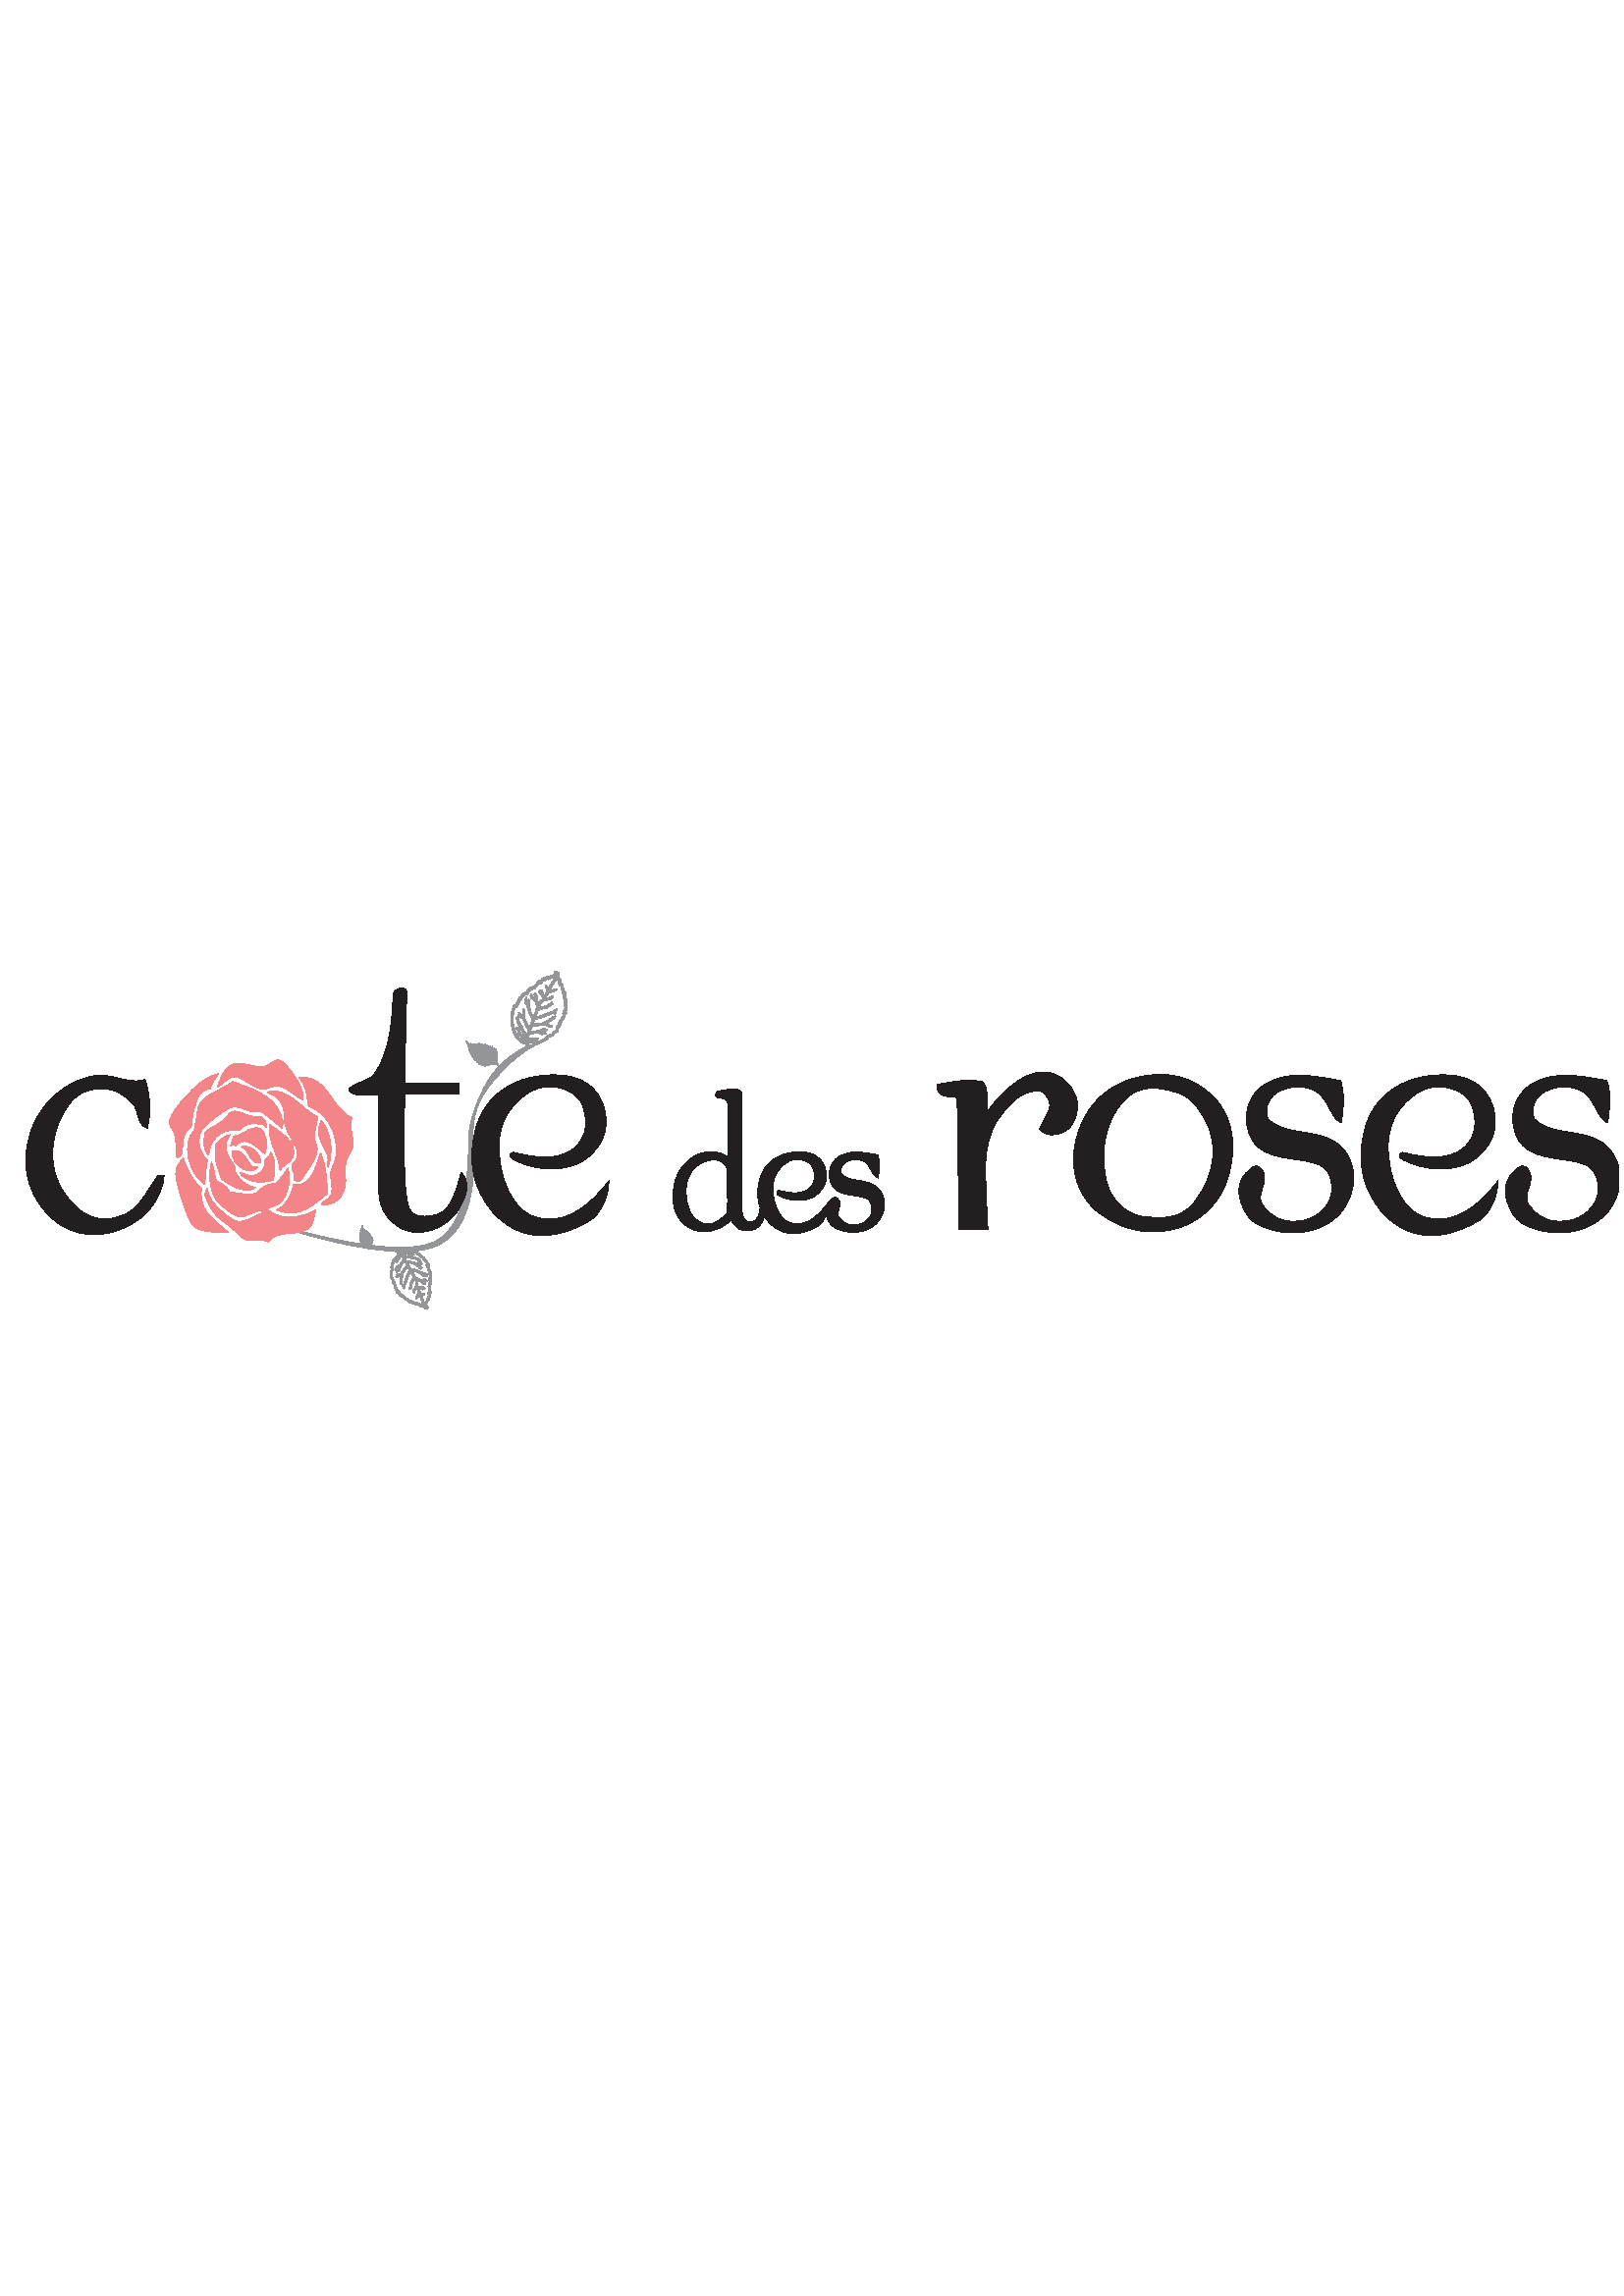 COTE DES ROSES.png